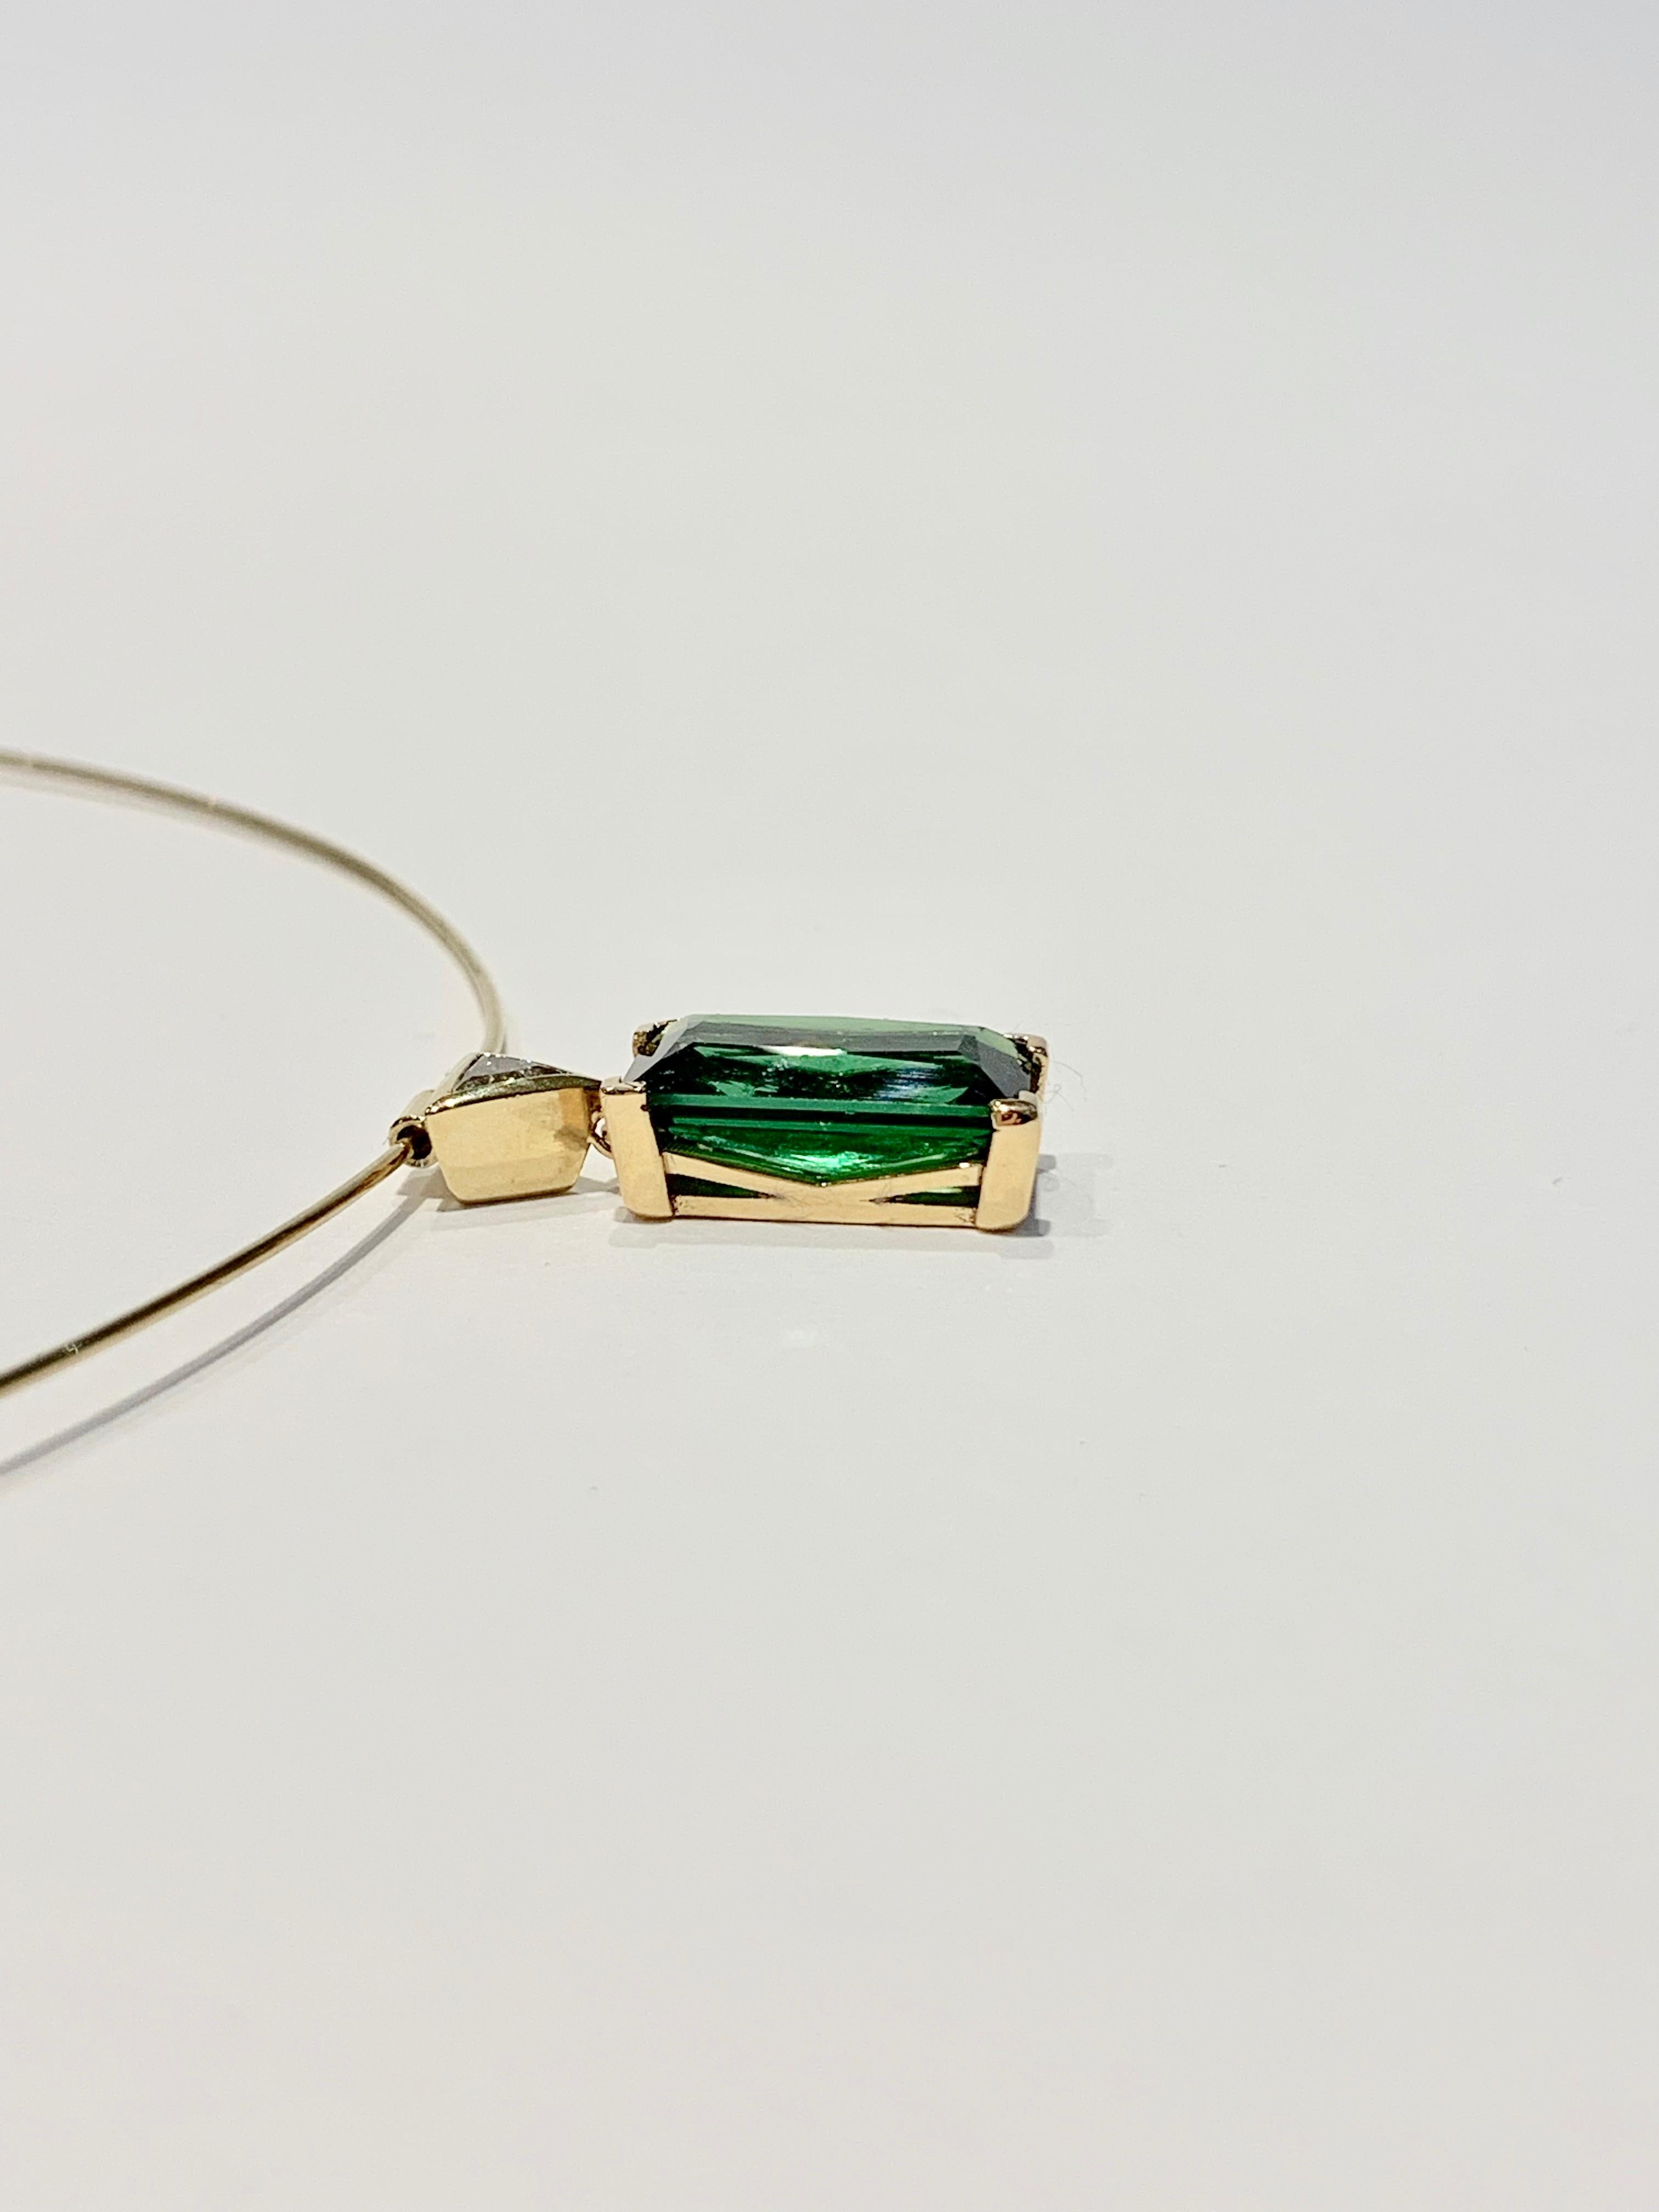 Emerald Cut Bespoke 6.10ct Octagon Cut Green Tourmaline Diamond Pendant on 18ct Neck Wire For Sale